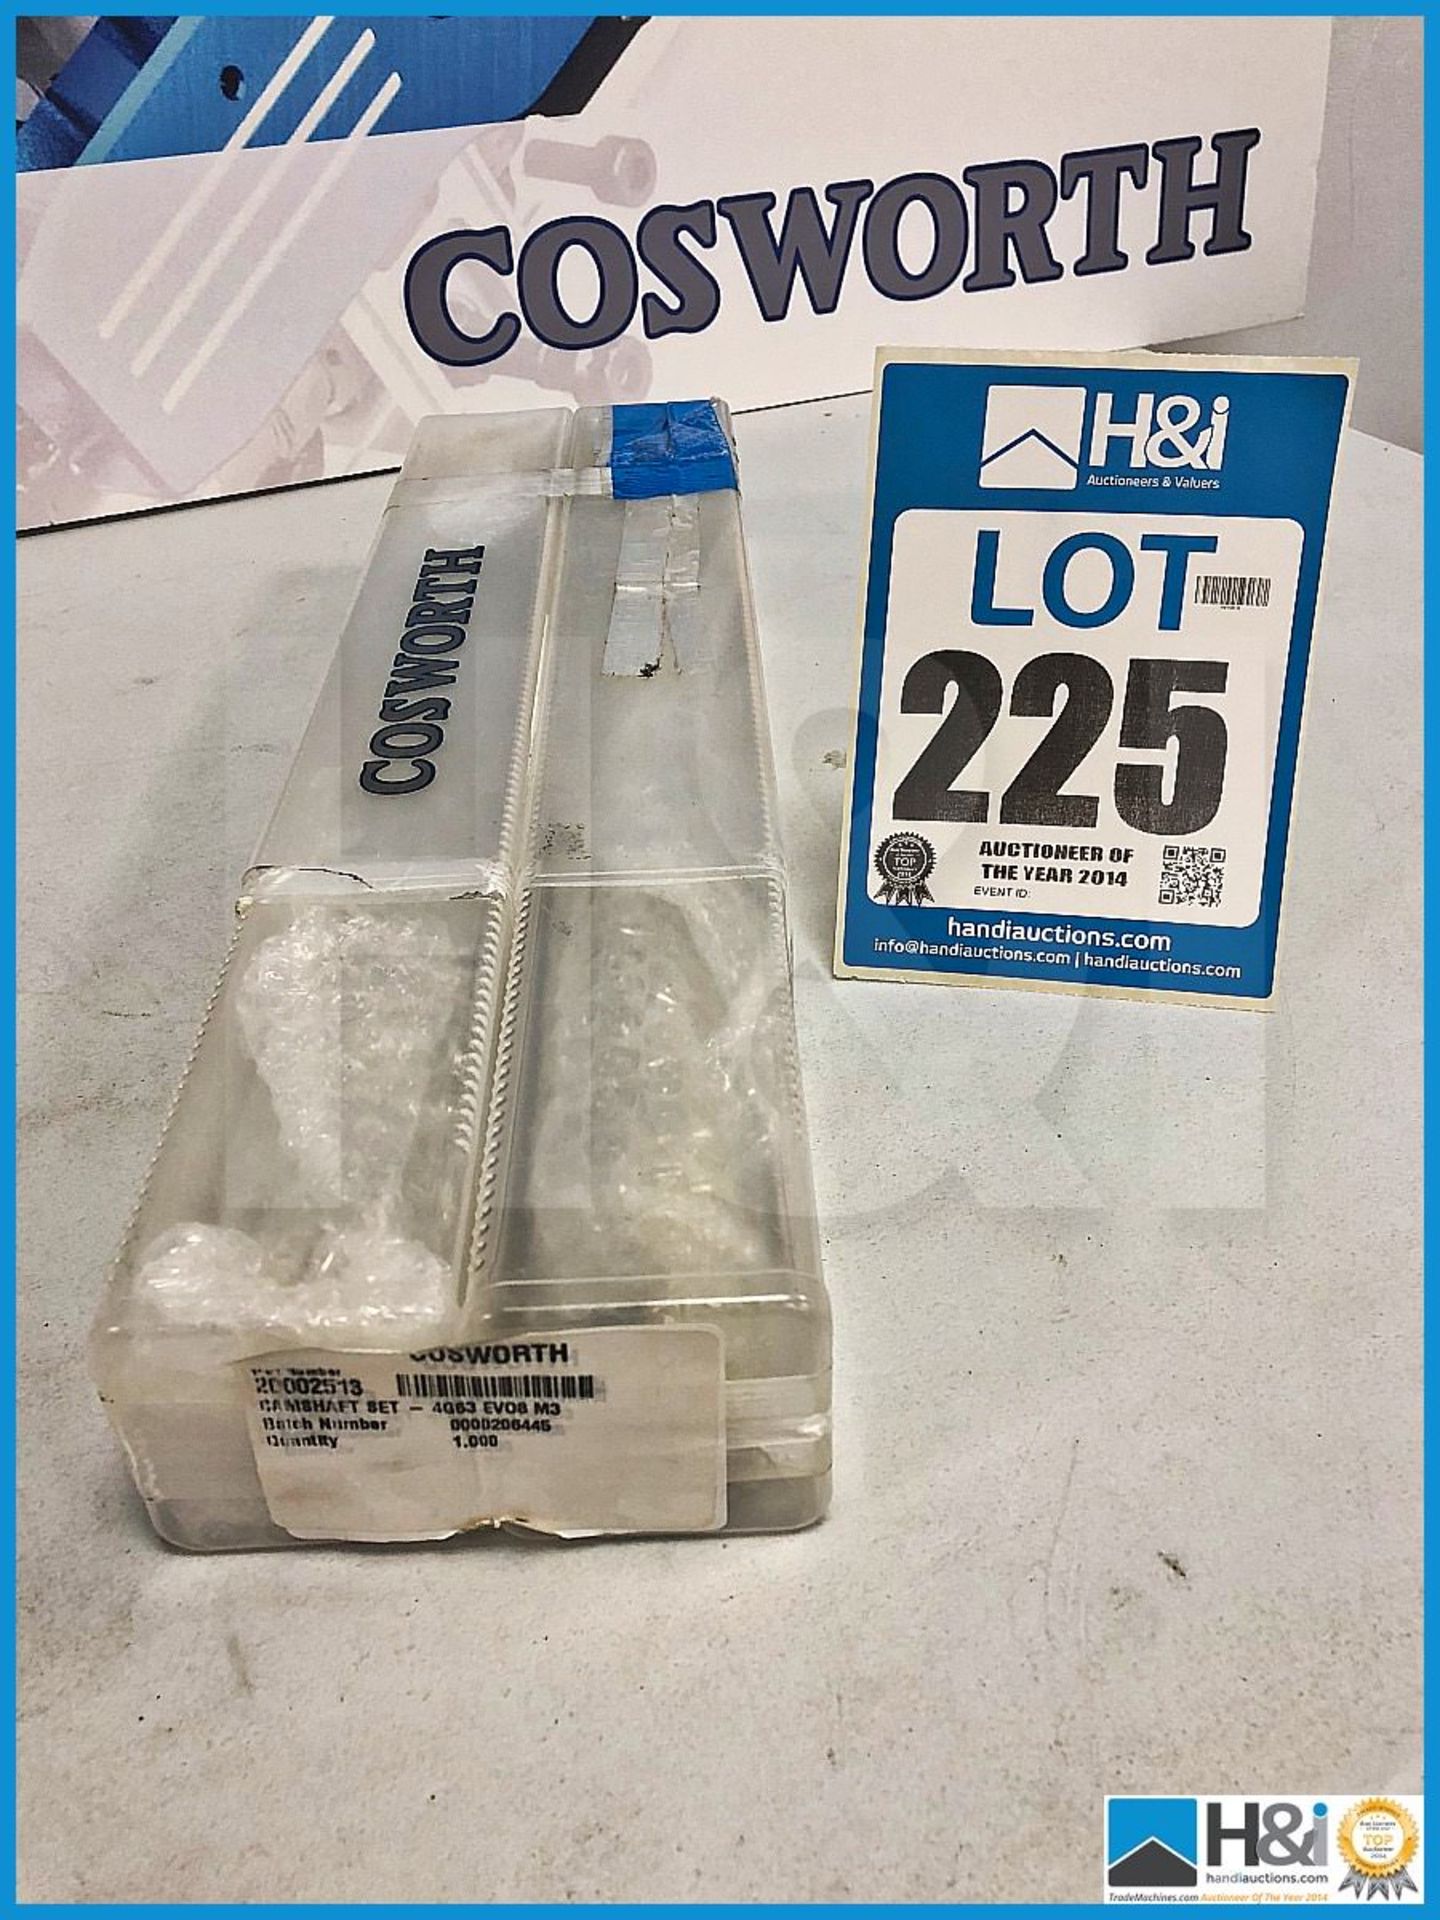 Cosworth Mitsubishi Evo 4G63 Evo8 M3 camshaft set. Code: 20002513